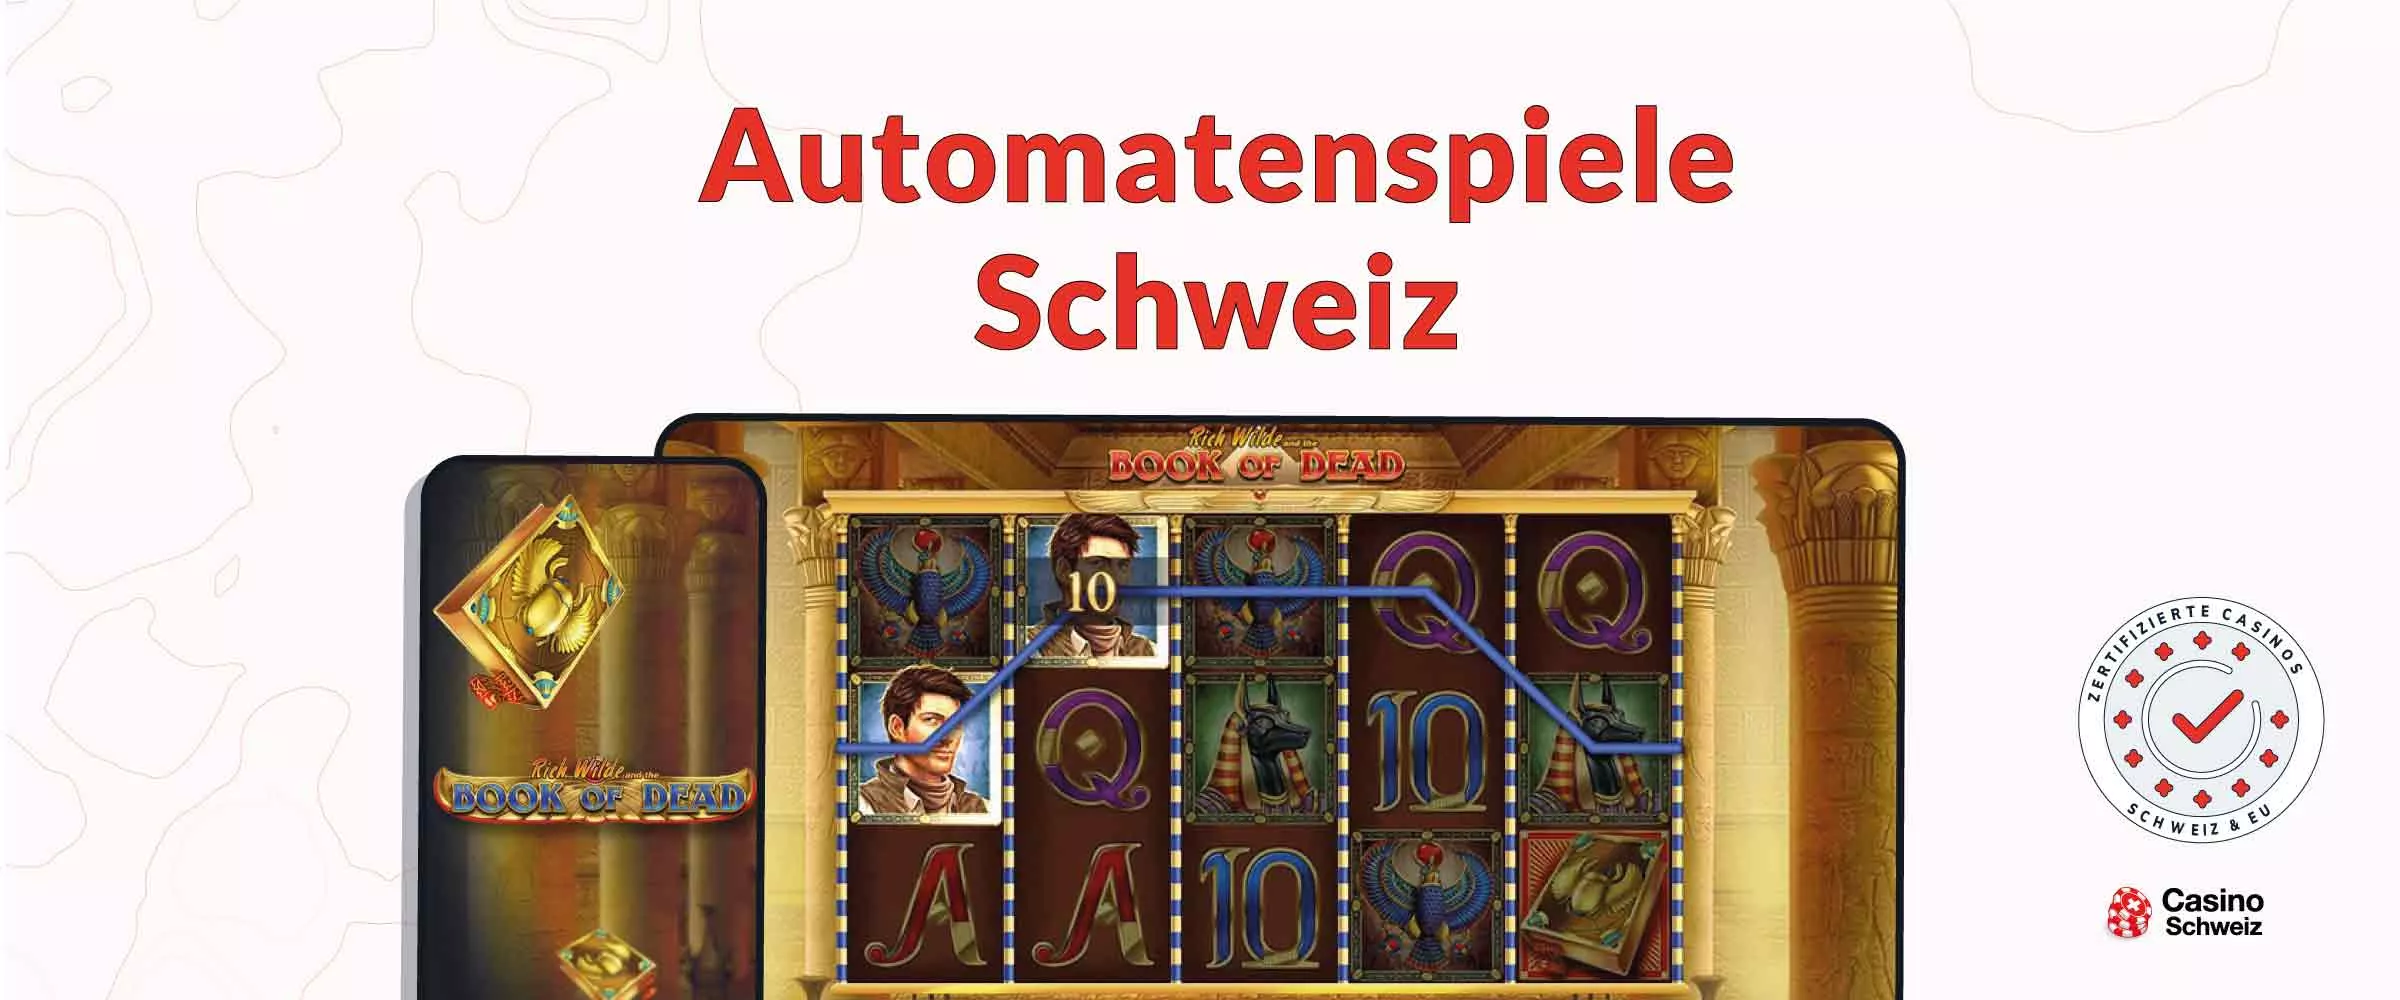 Automatenspiele Schweiz 